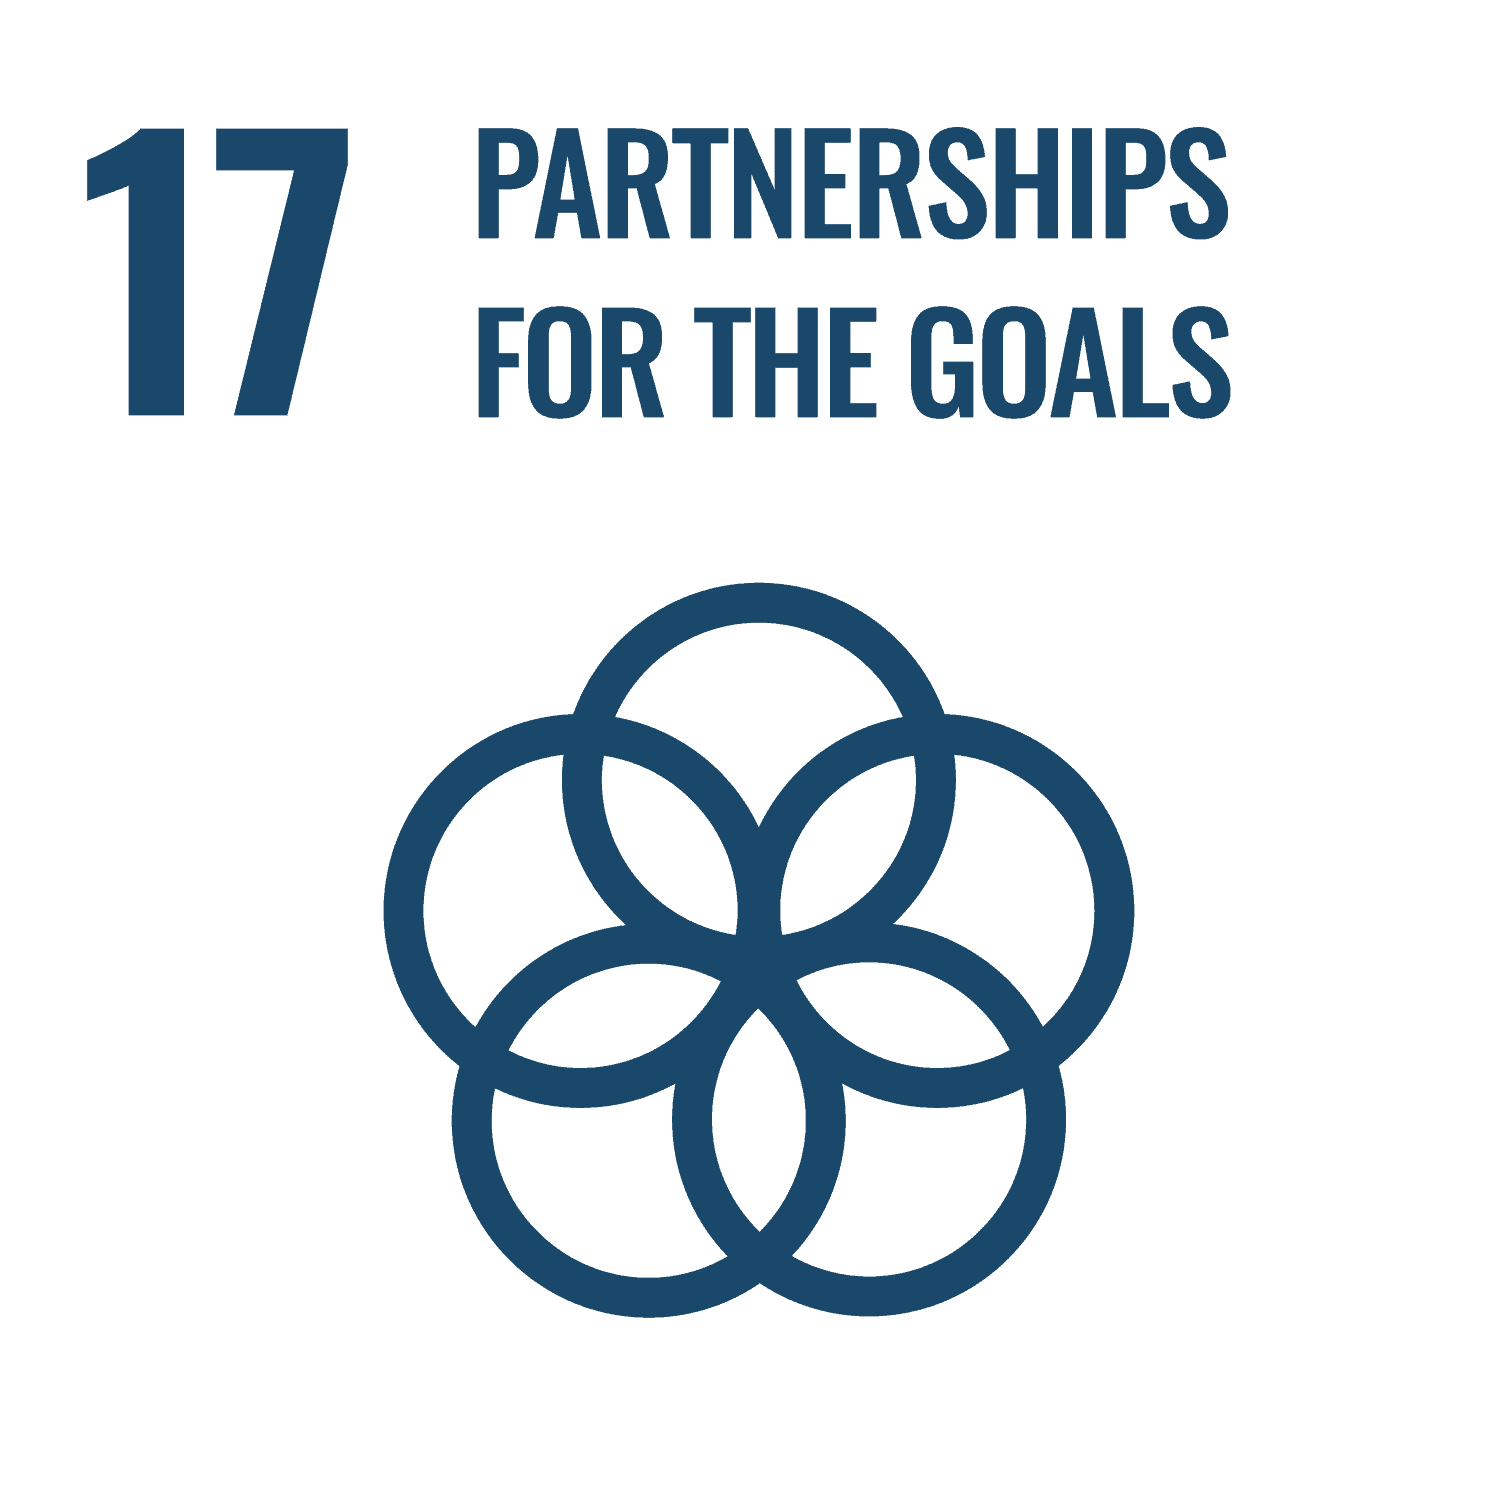 UN Sustainable Development Goal number 17